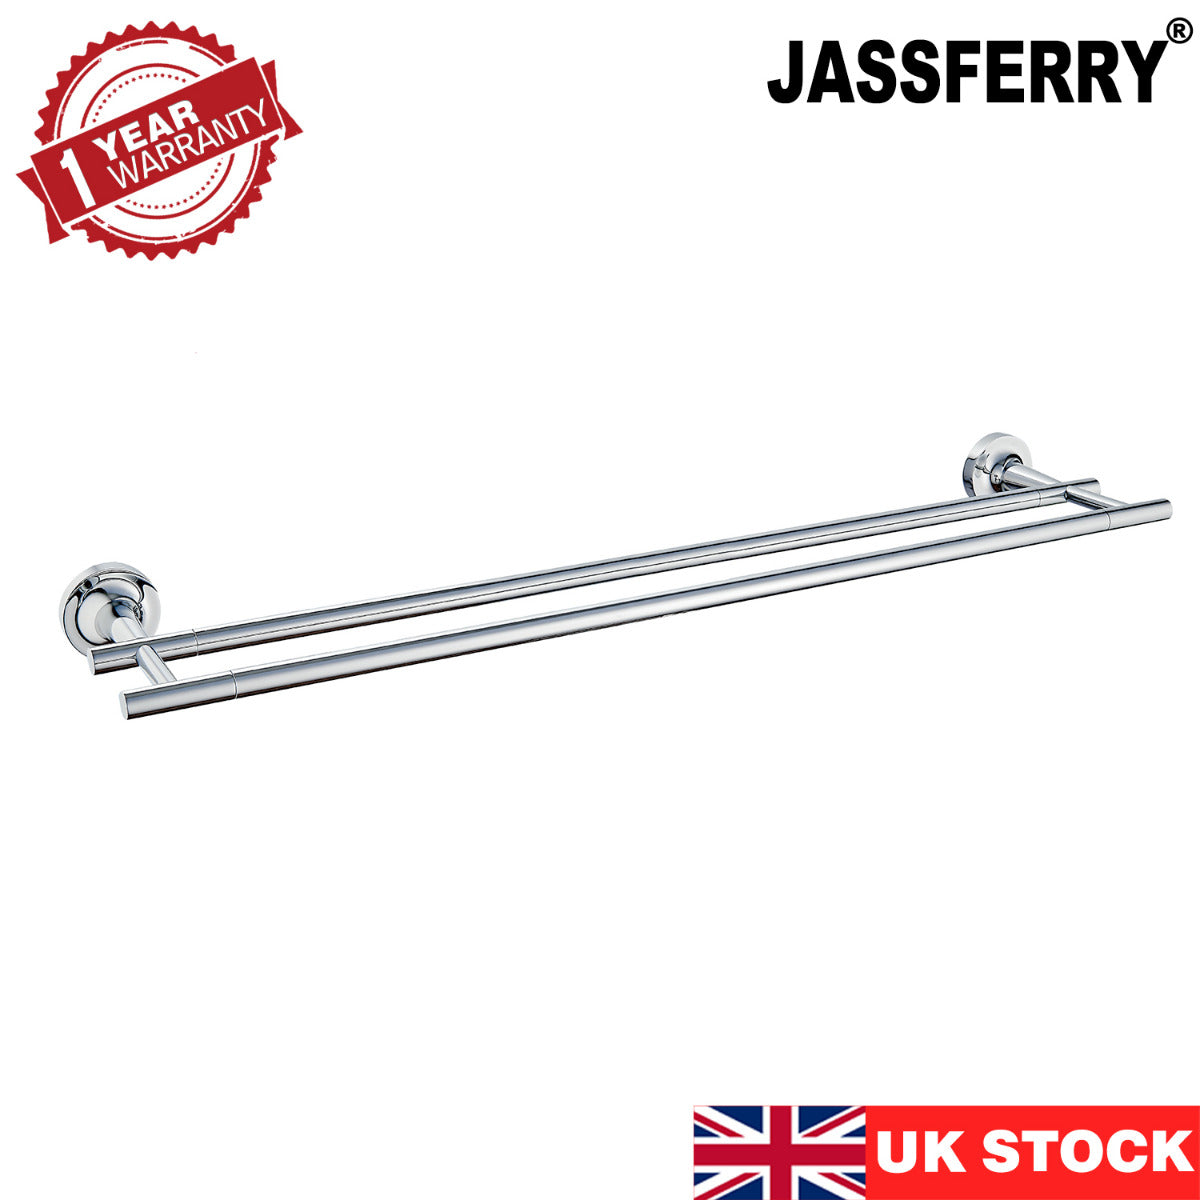 JassferryJASSFERRY 600 Double Towel Rail Wall Mounted Dual Rod Towel Bar Polished ChromeTowel Rail